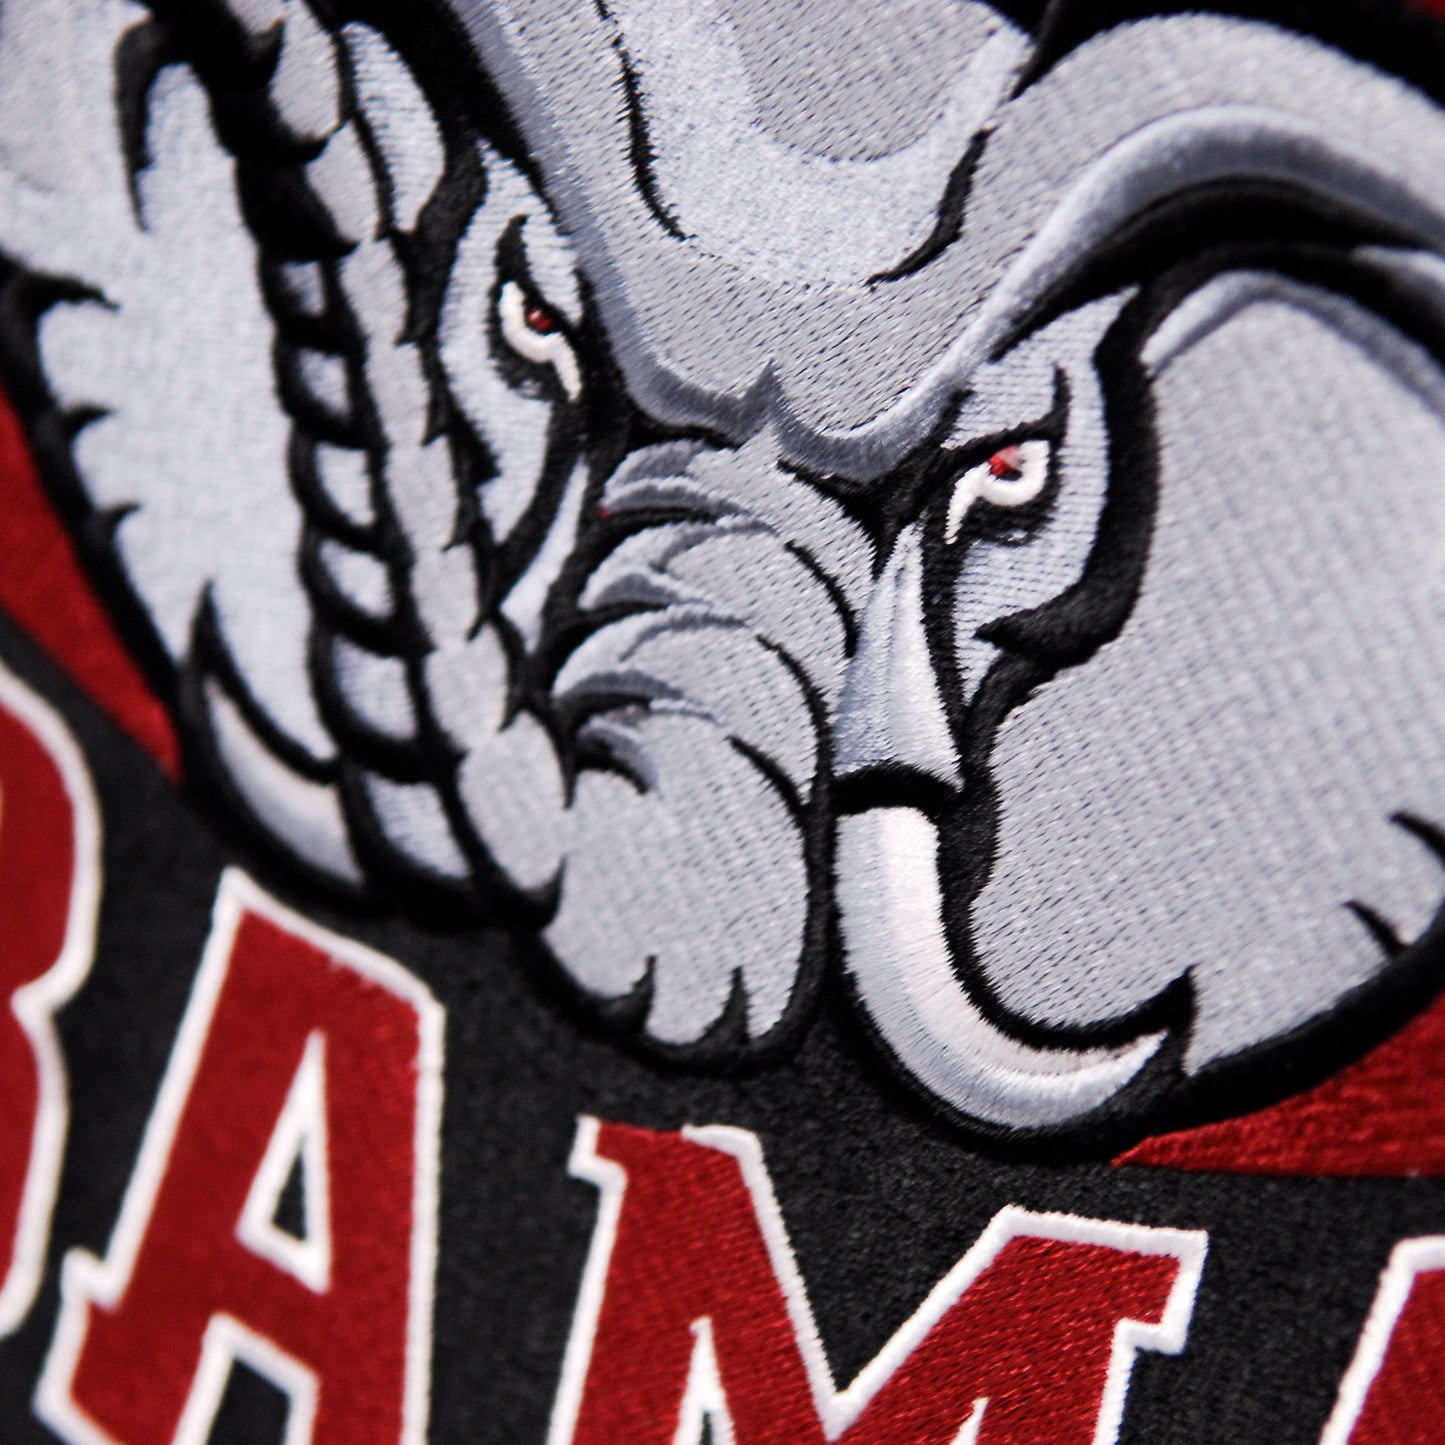 Stealth Recliner with Alabama Crimson Tide Bama Logo